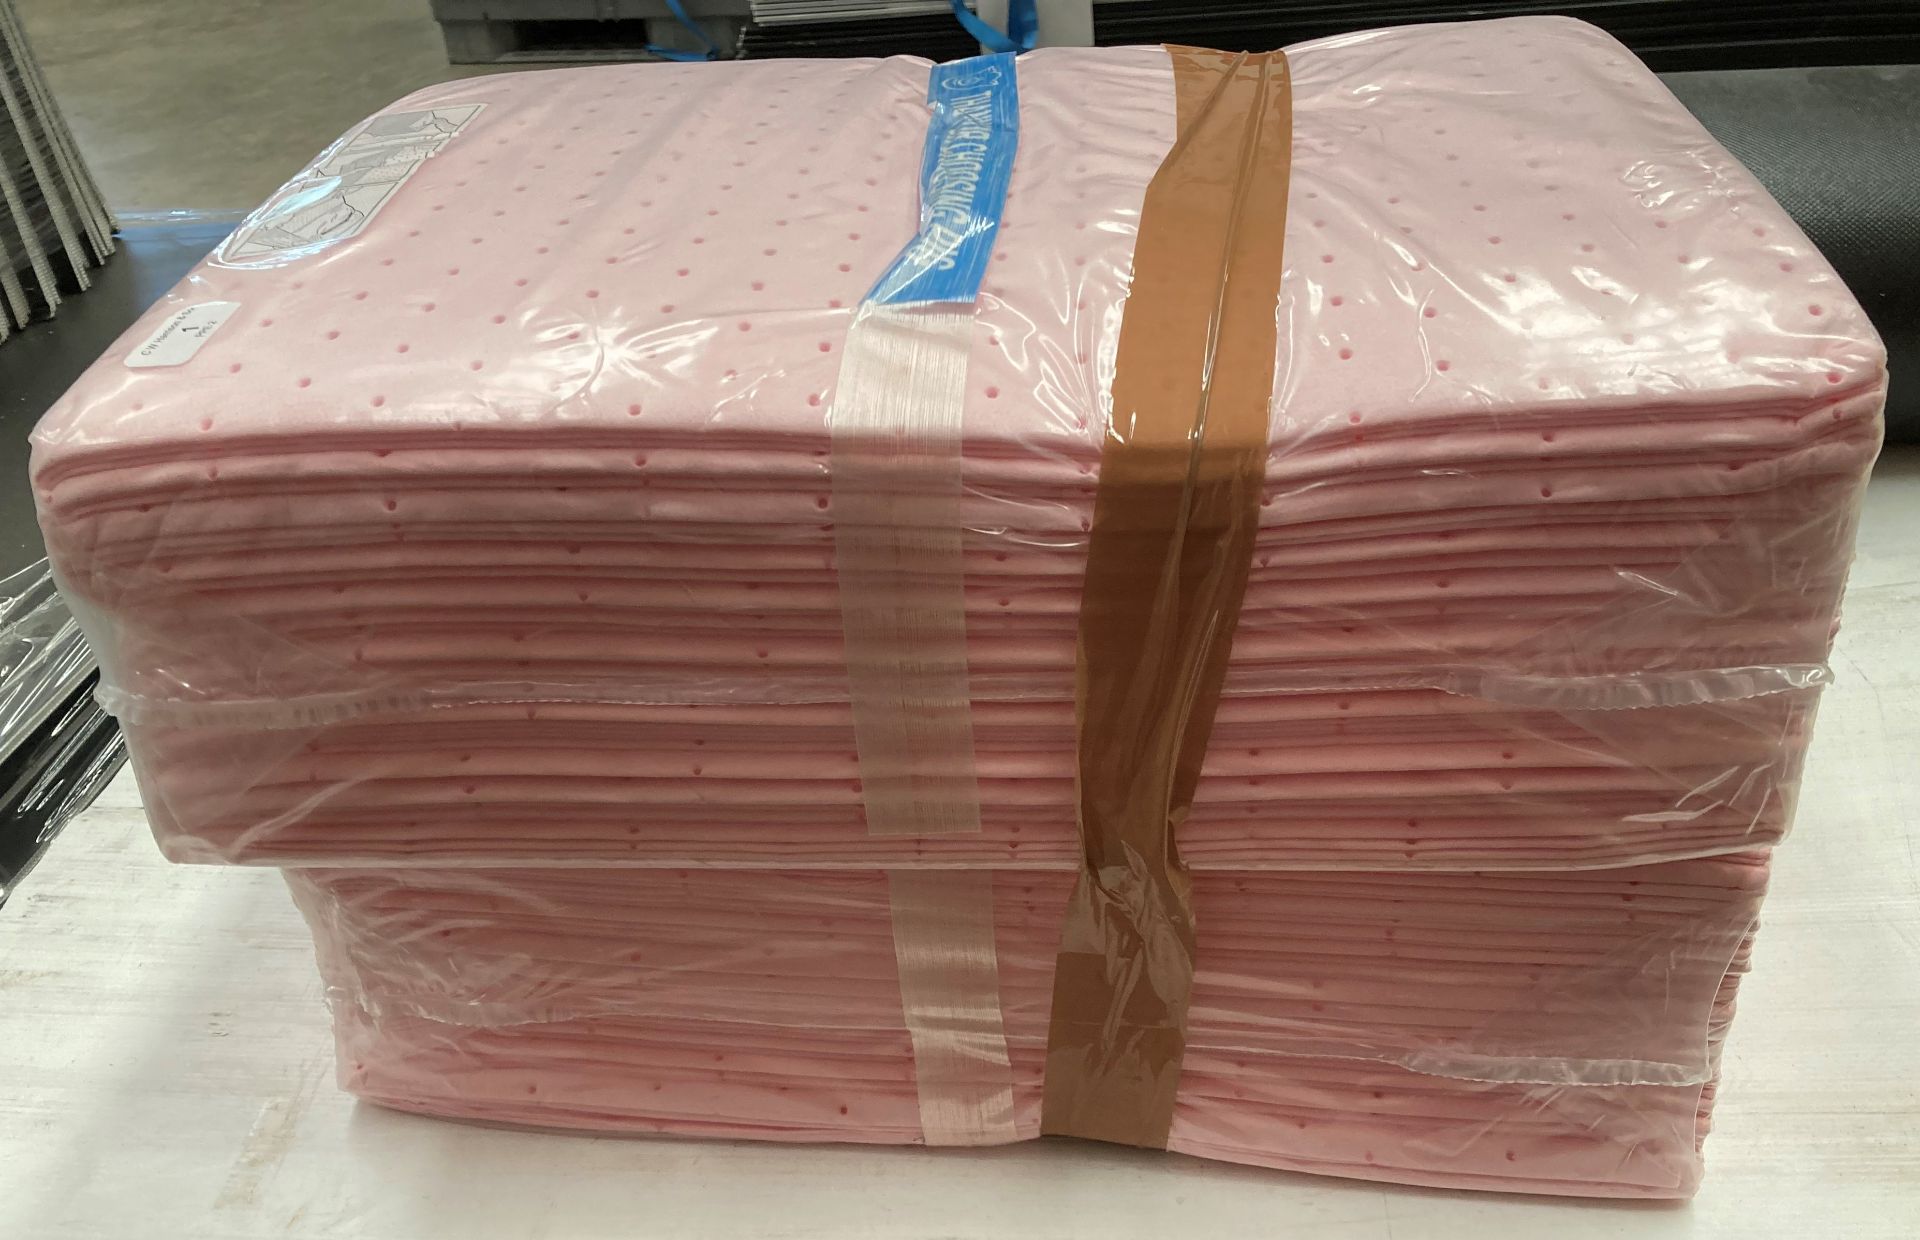 2 packs of 50 Pig Hazmat Chemical absorbent mat pads - 15" x 20"